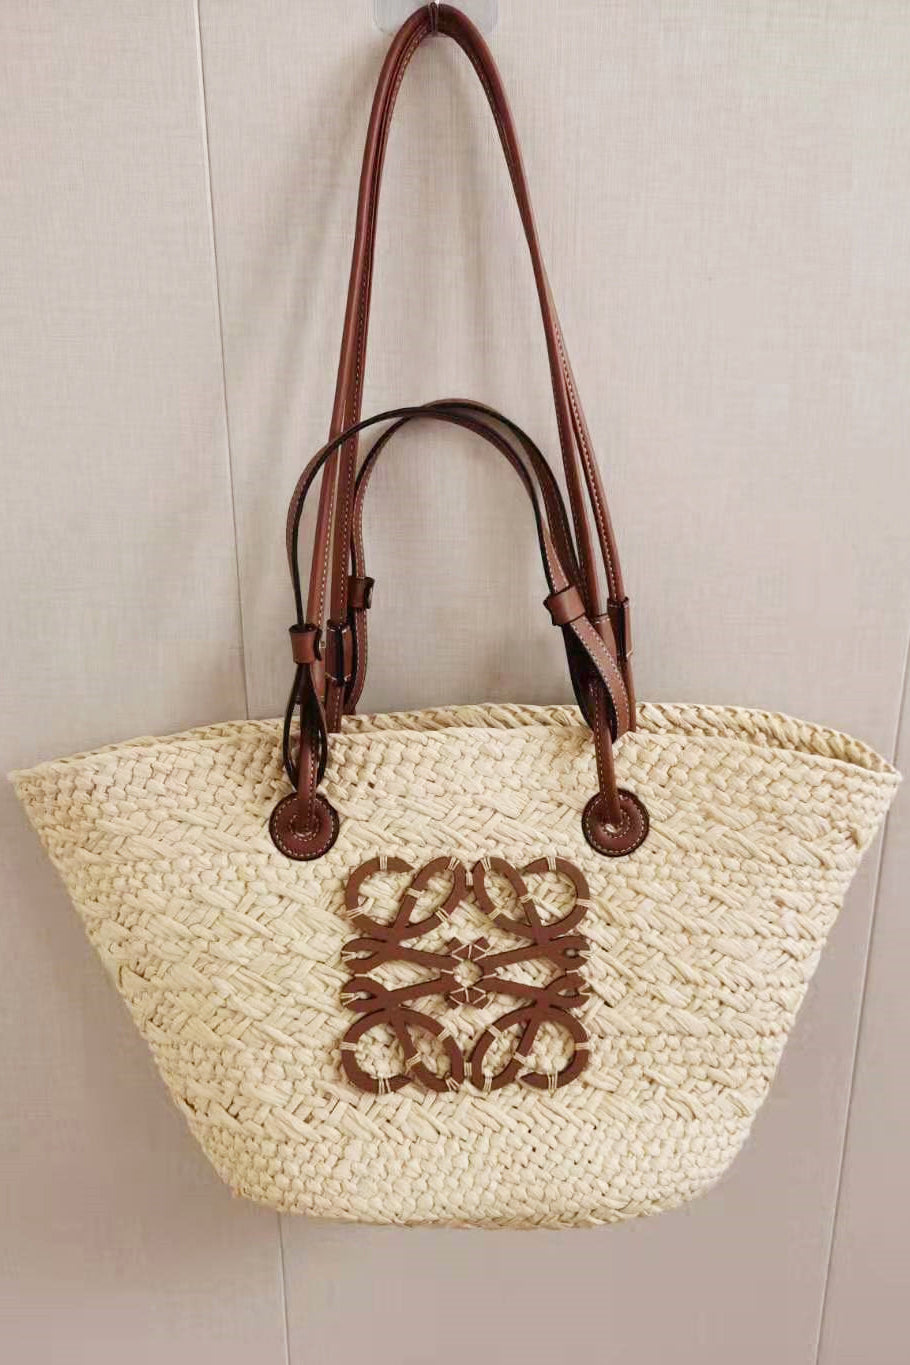 Loewe-style Papyrus Handwoven Tote Bag & Corn Husk Handwoven Clutch